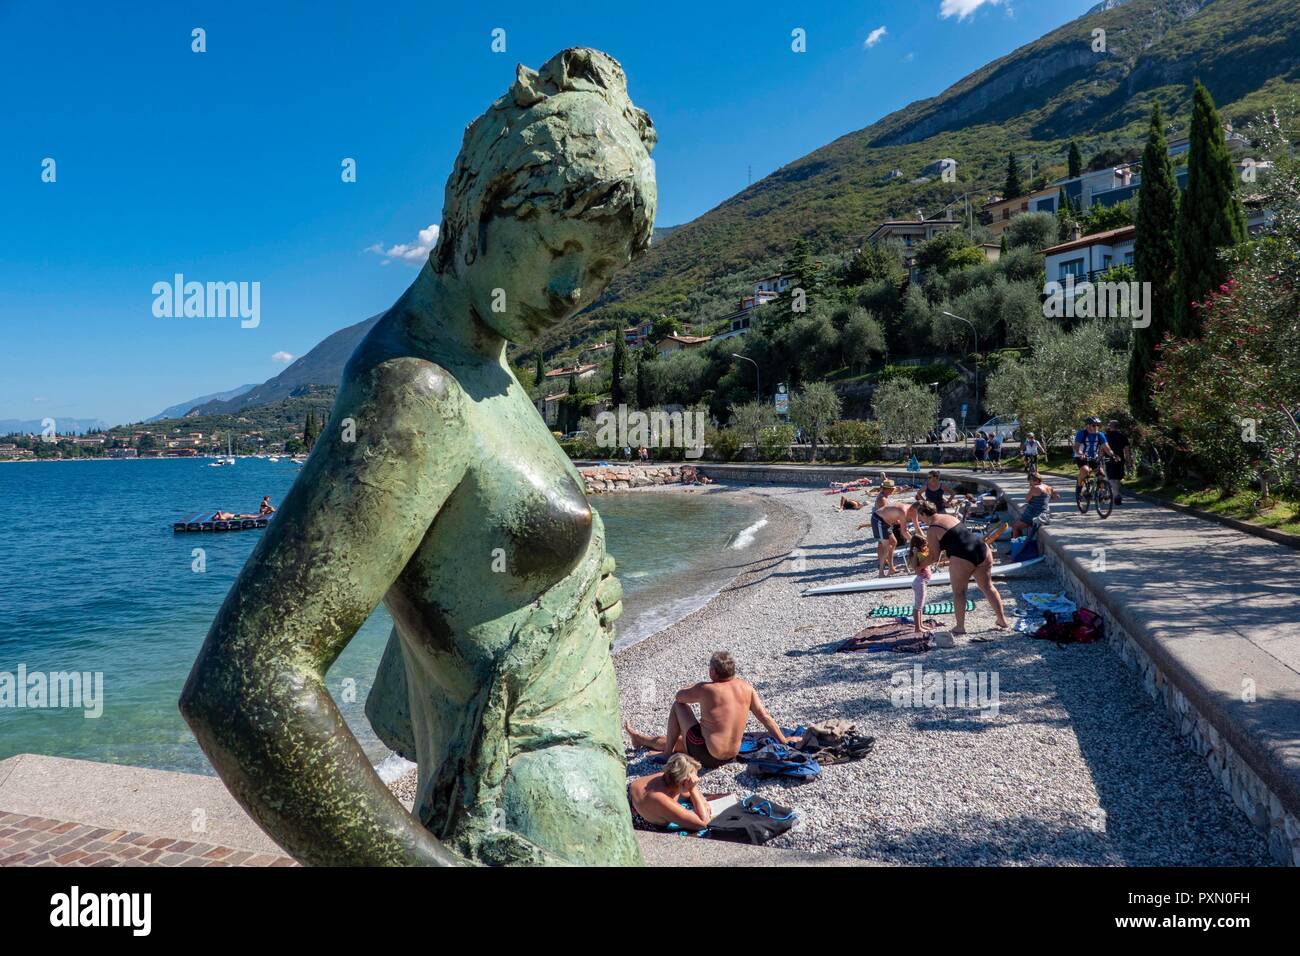 Cassone, Garda Lake, Italy, 09.05.2018. decorative bronce statue by artist Luisa Granera is an eyecatcher at the beach near Cassone. Stock Photo